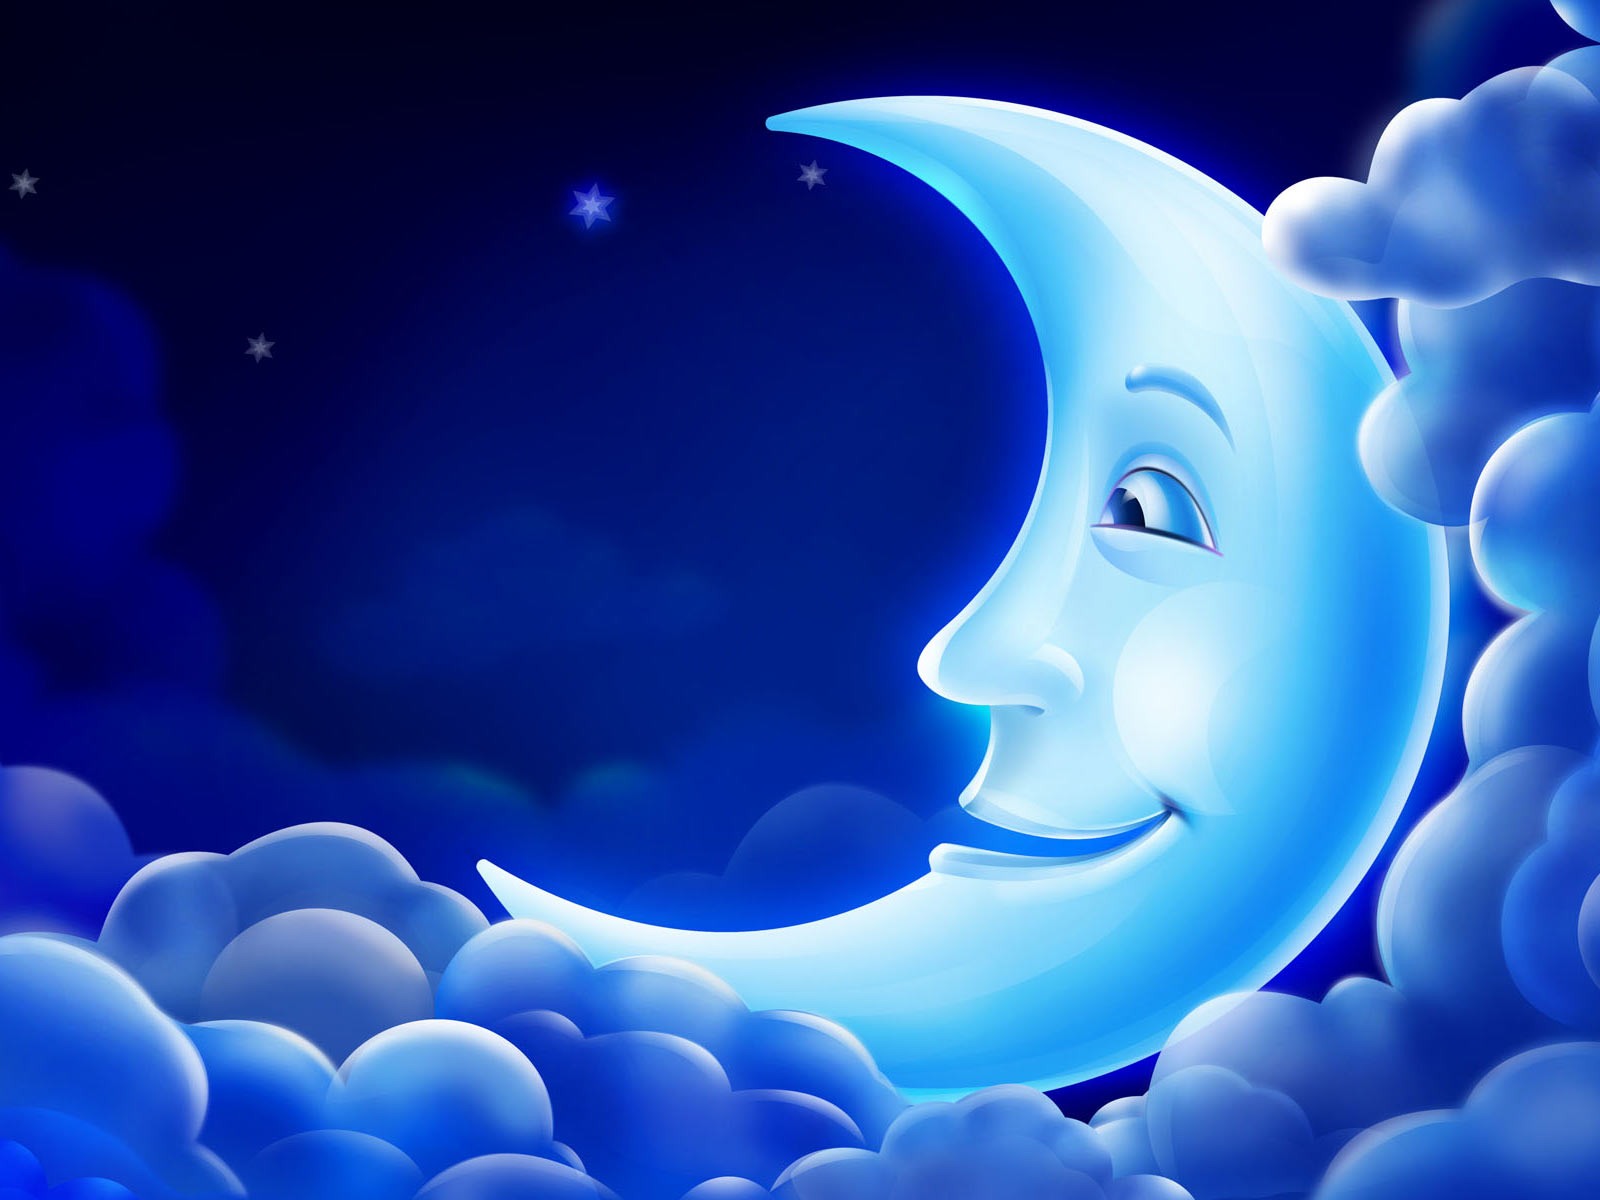 animated crescent moon image